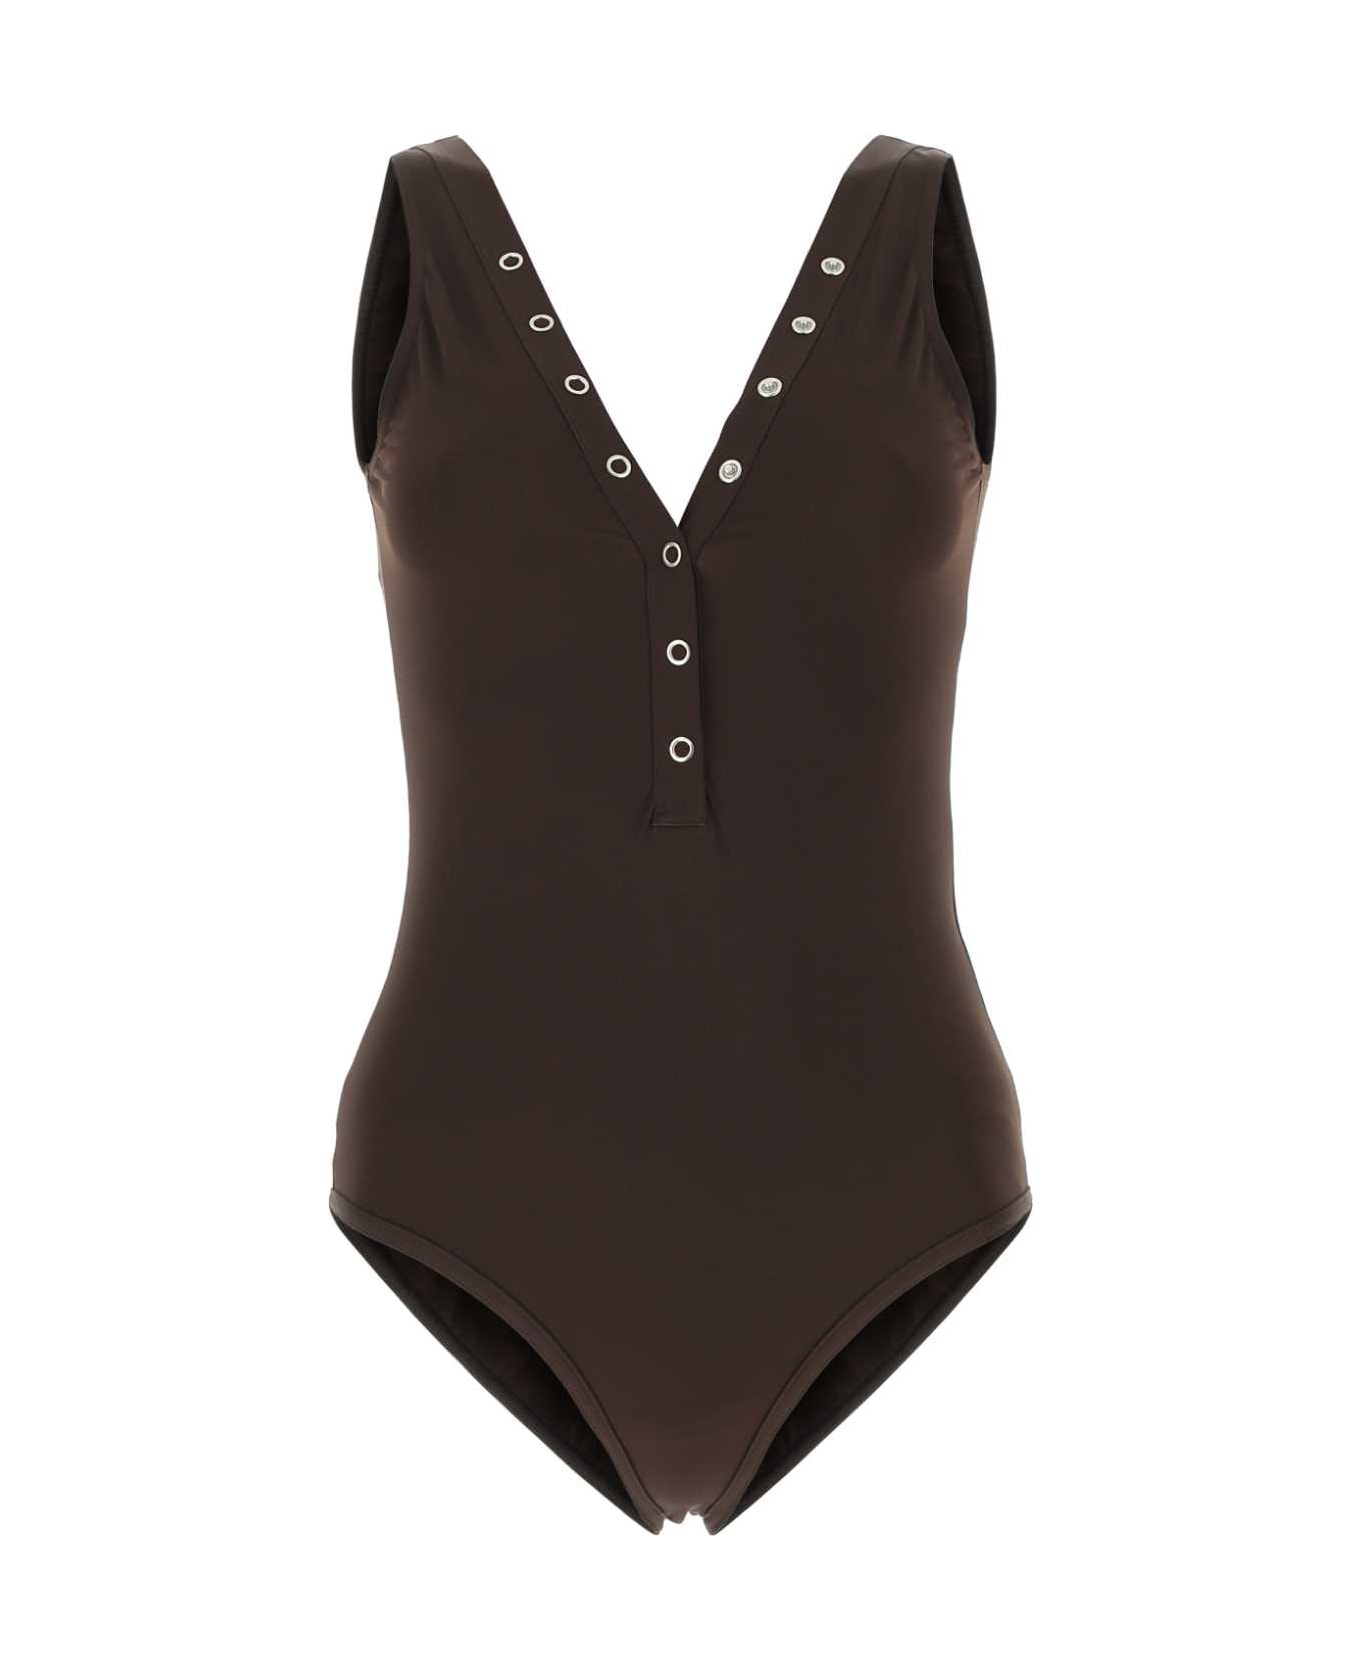 Bottega Veneta Chocolate Stretch Nylon Swimsuit - 2178 水着